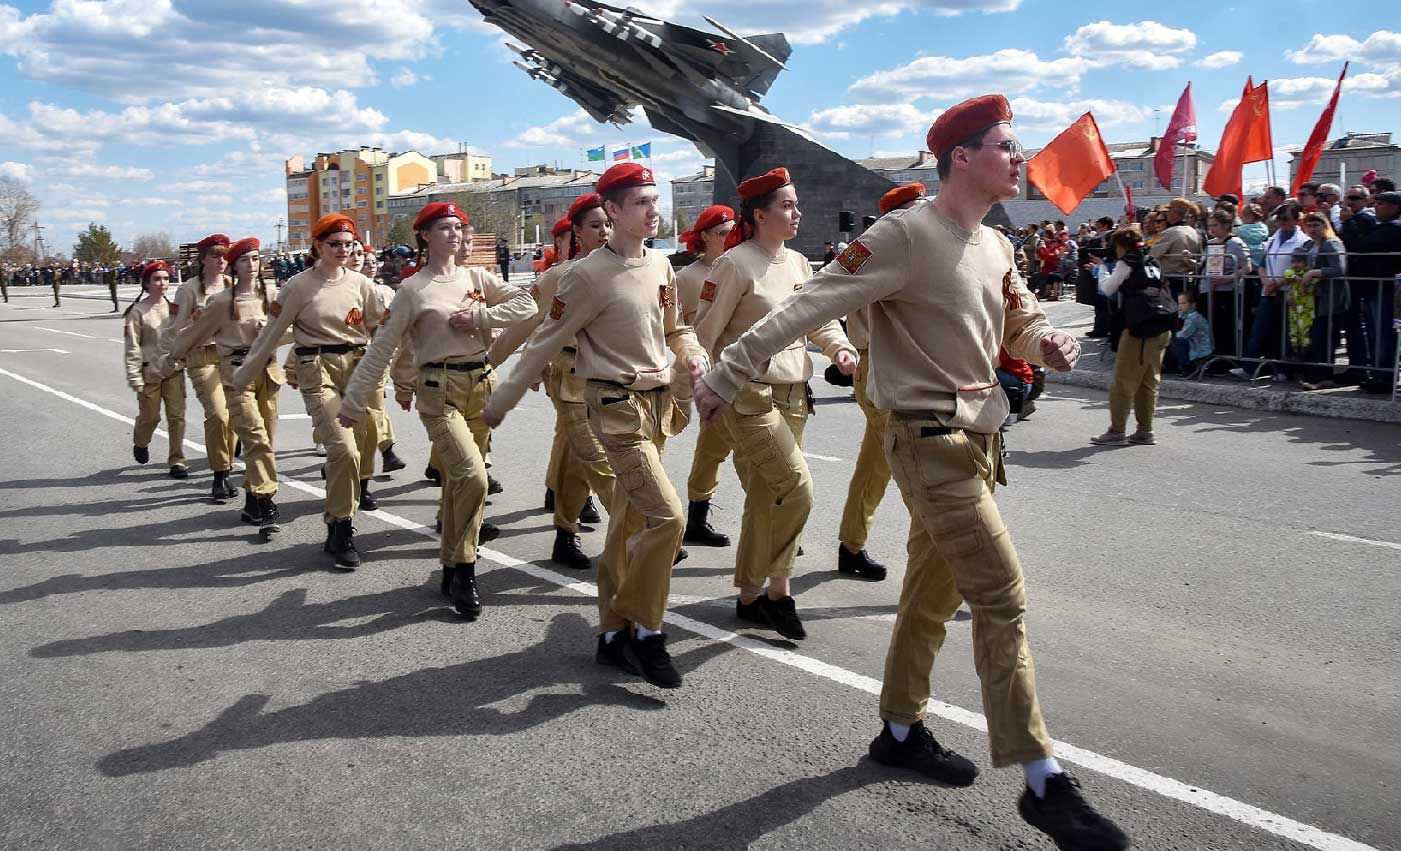 Юнармейцы чеканят шаг на параде в честь Дня Победы.